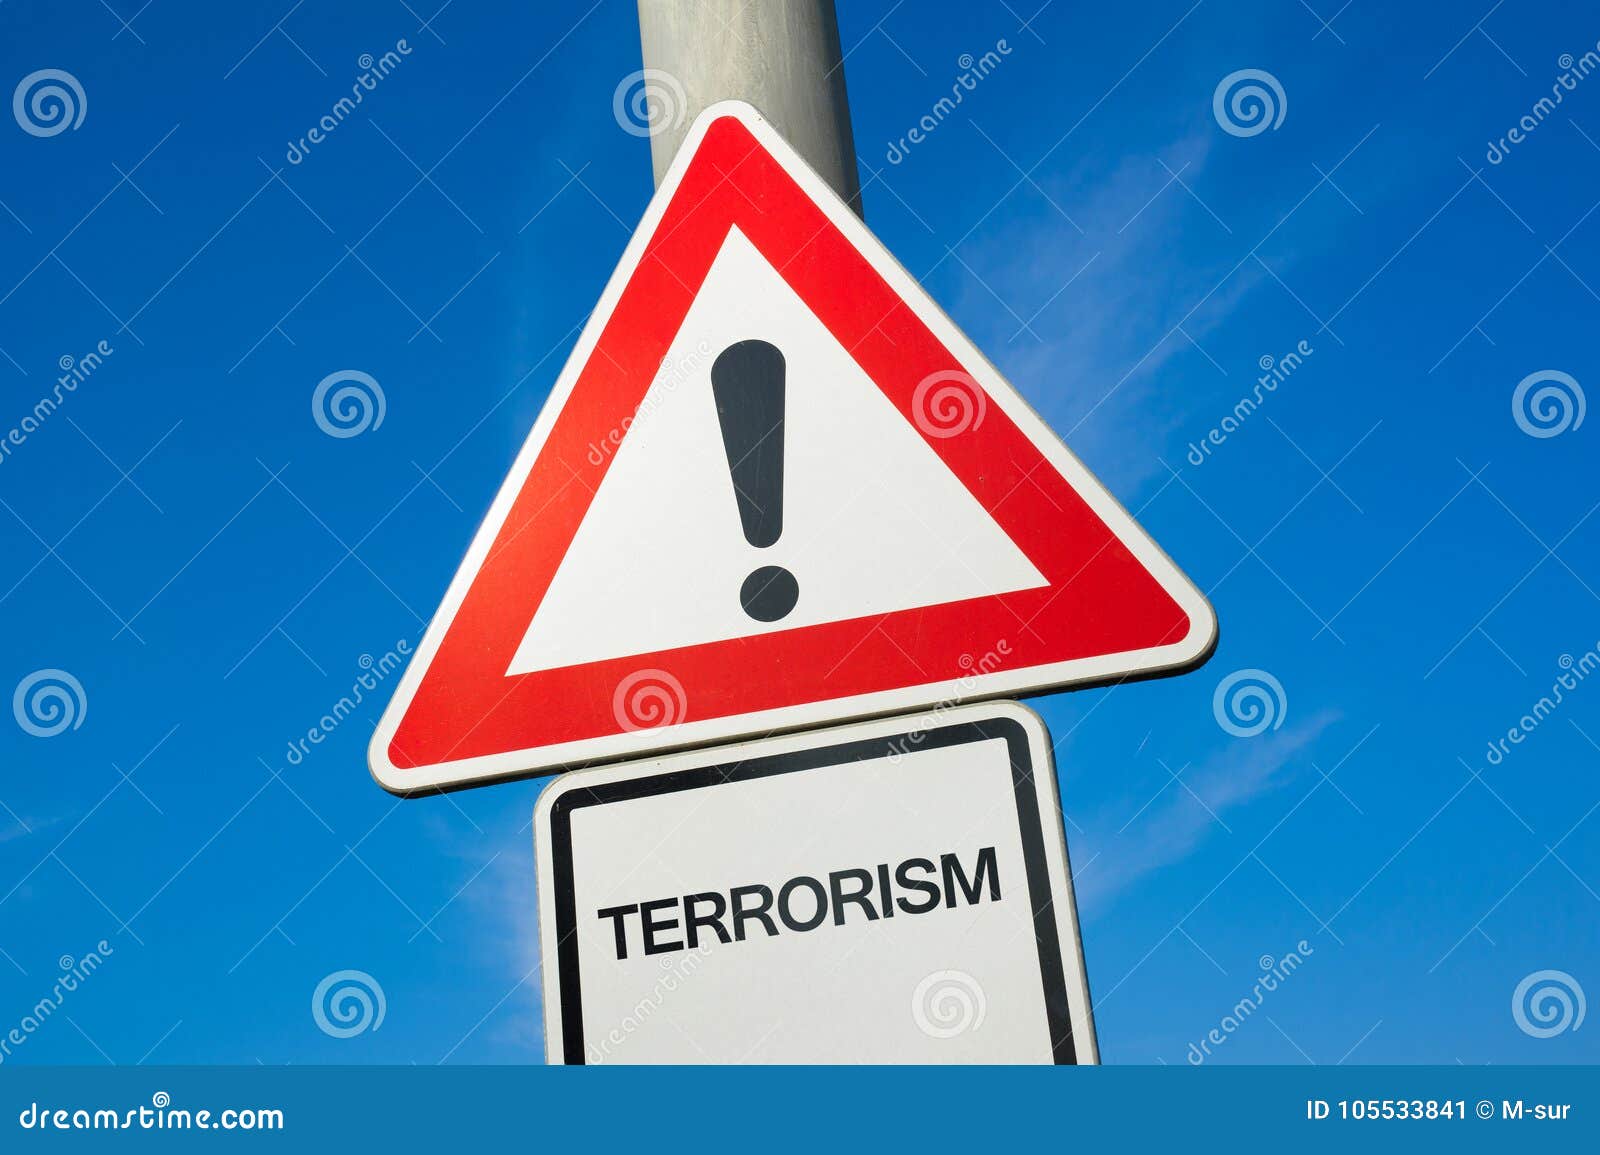 danger of terrorism